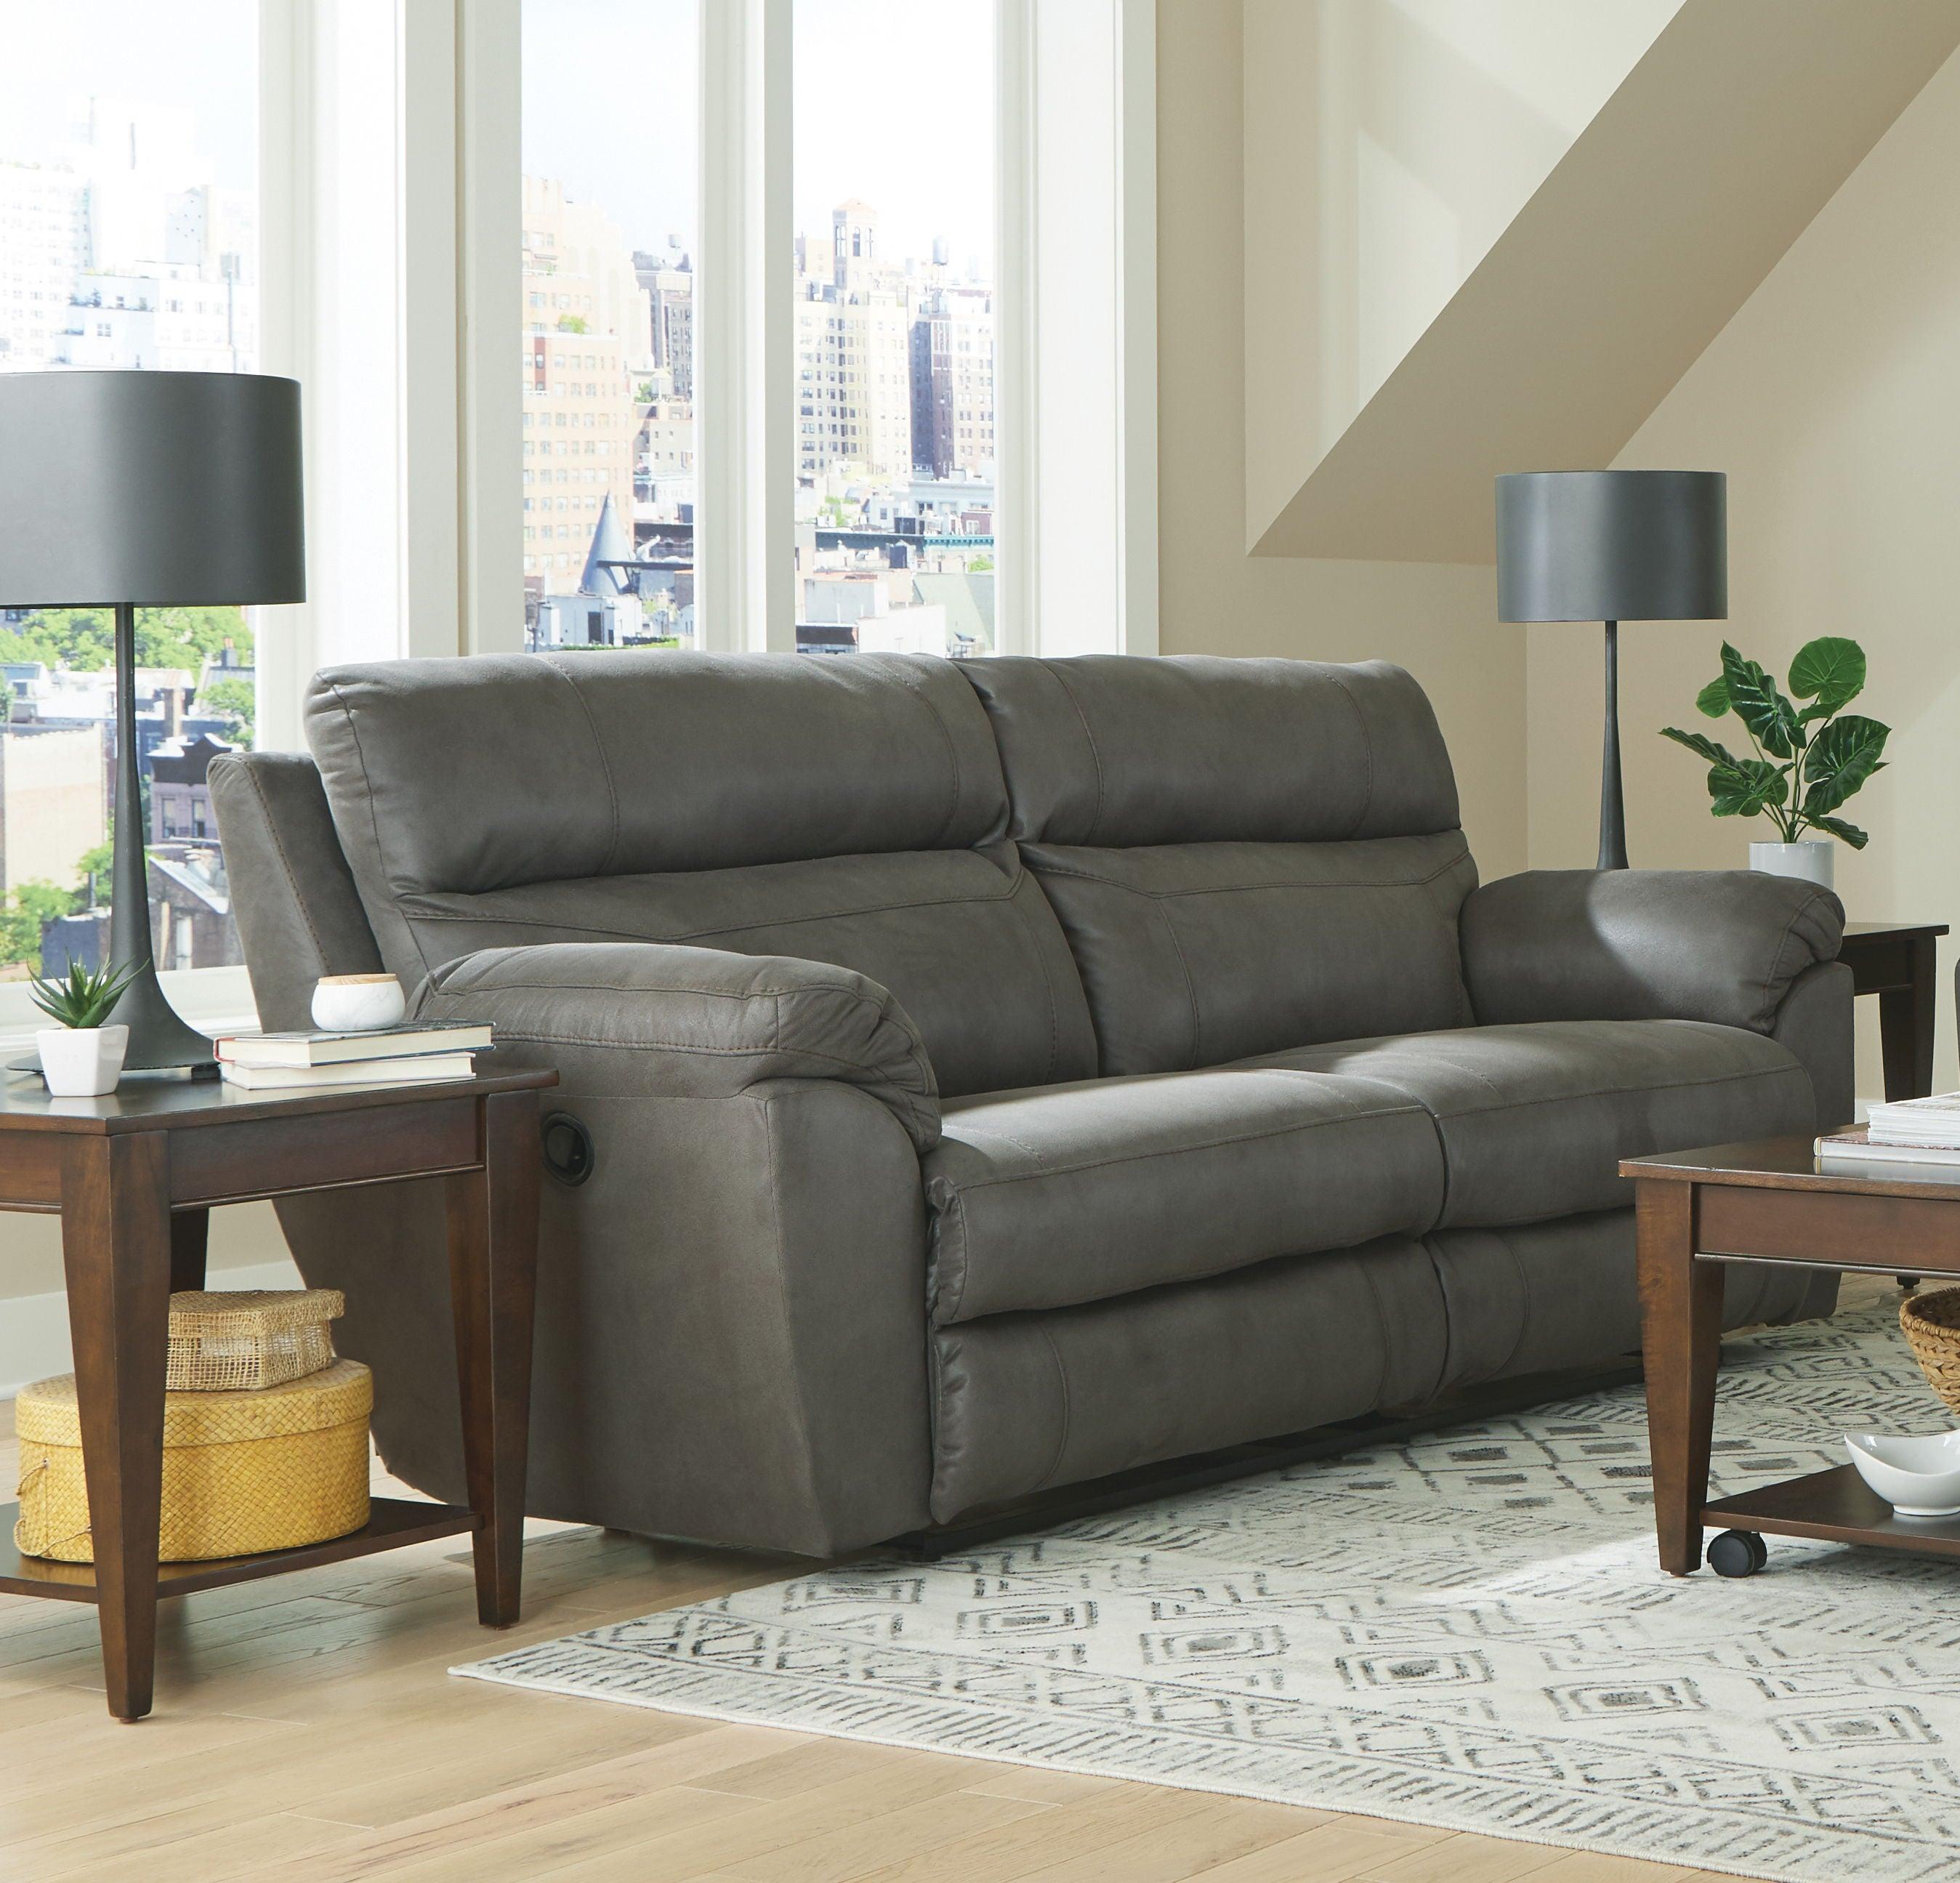 Catnapper - Atlas - Reclining Sofa - Charcoal - 5th Avenue Furniture